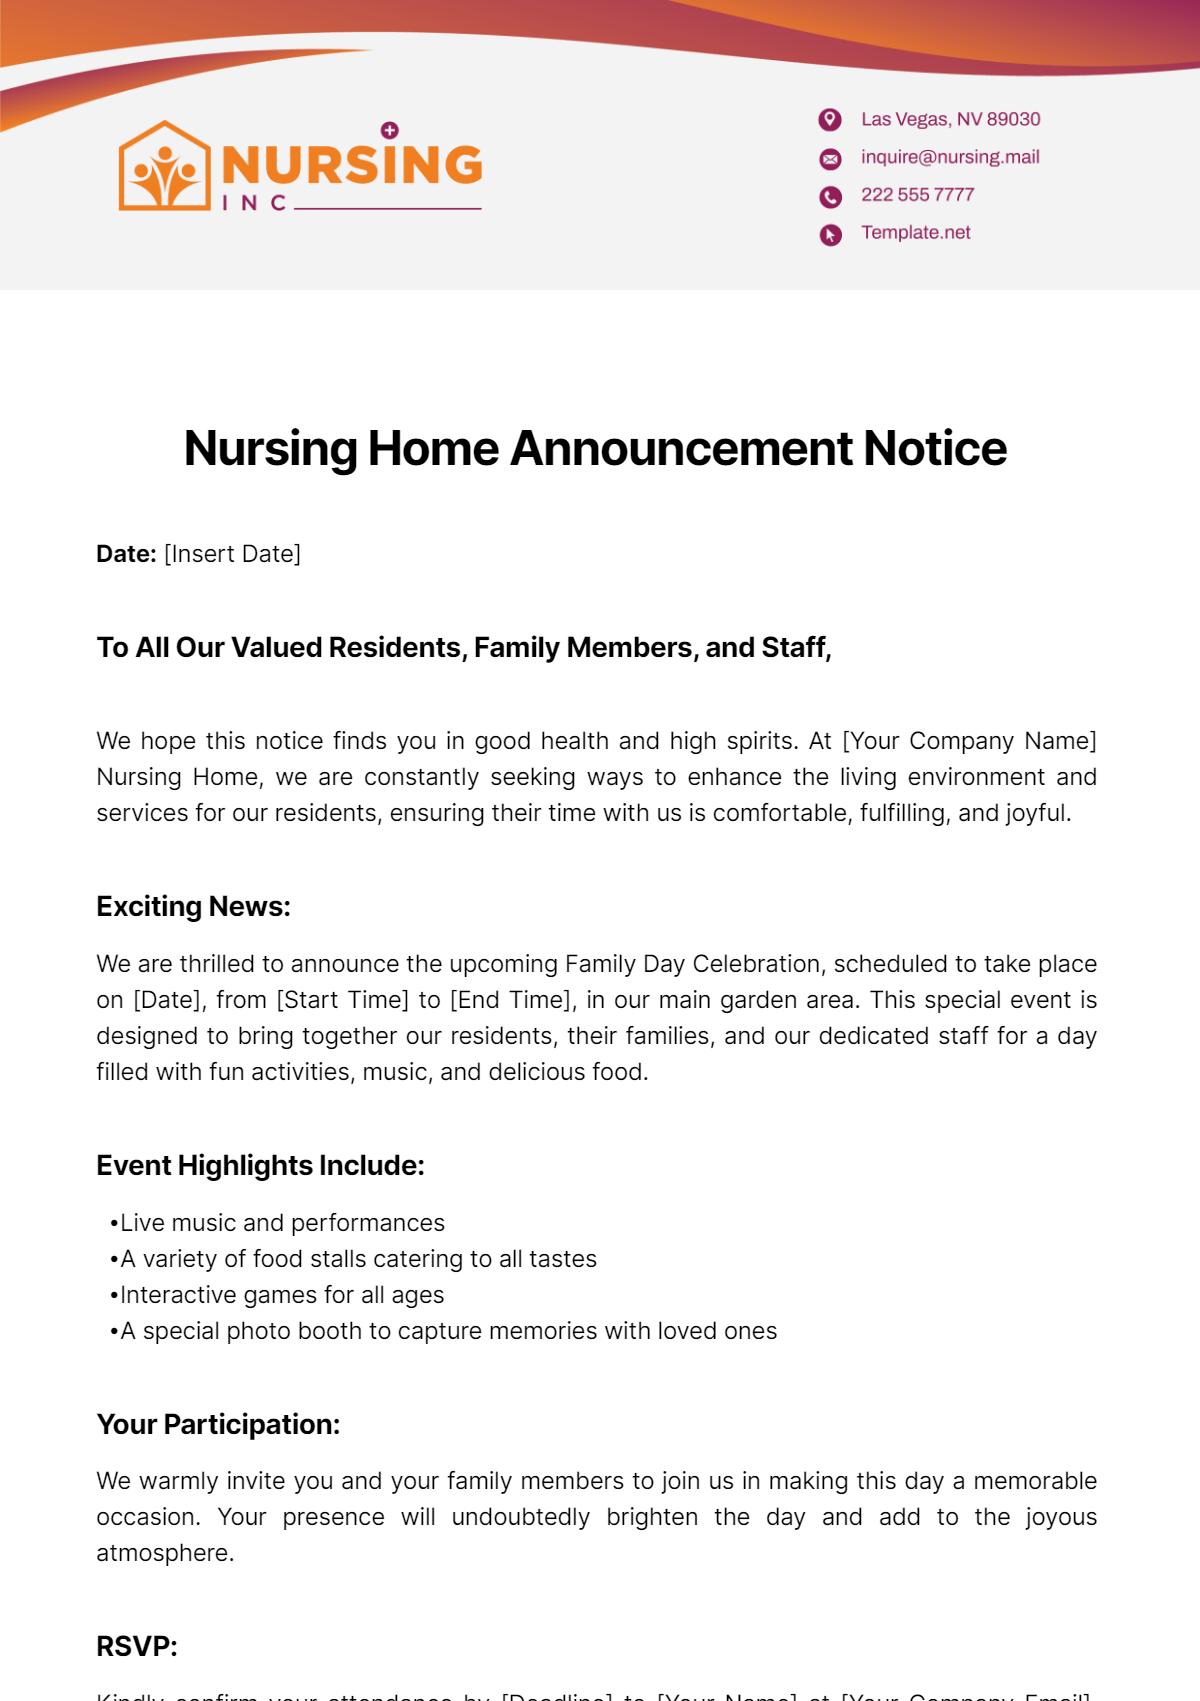 Nursing Home Announcement Notice Template